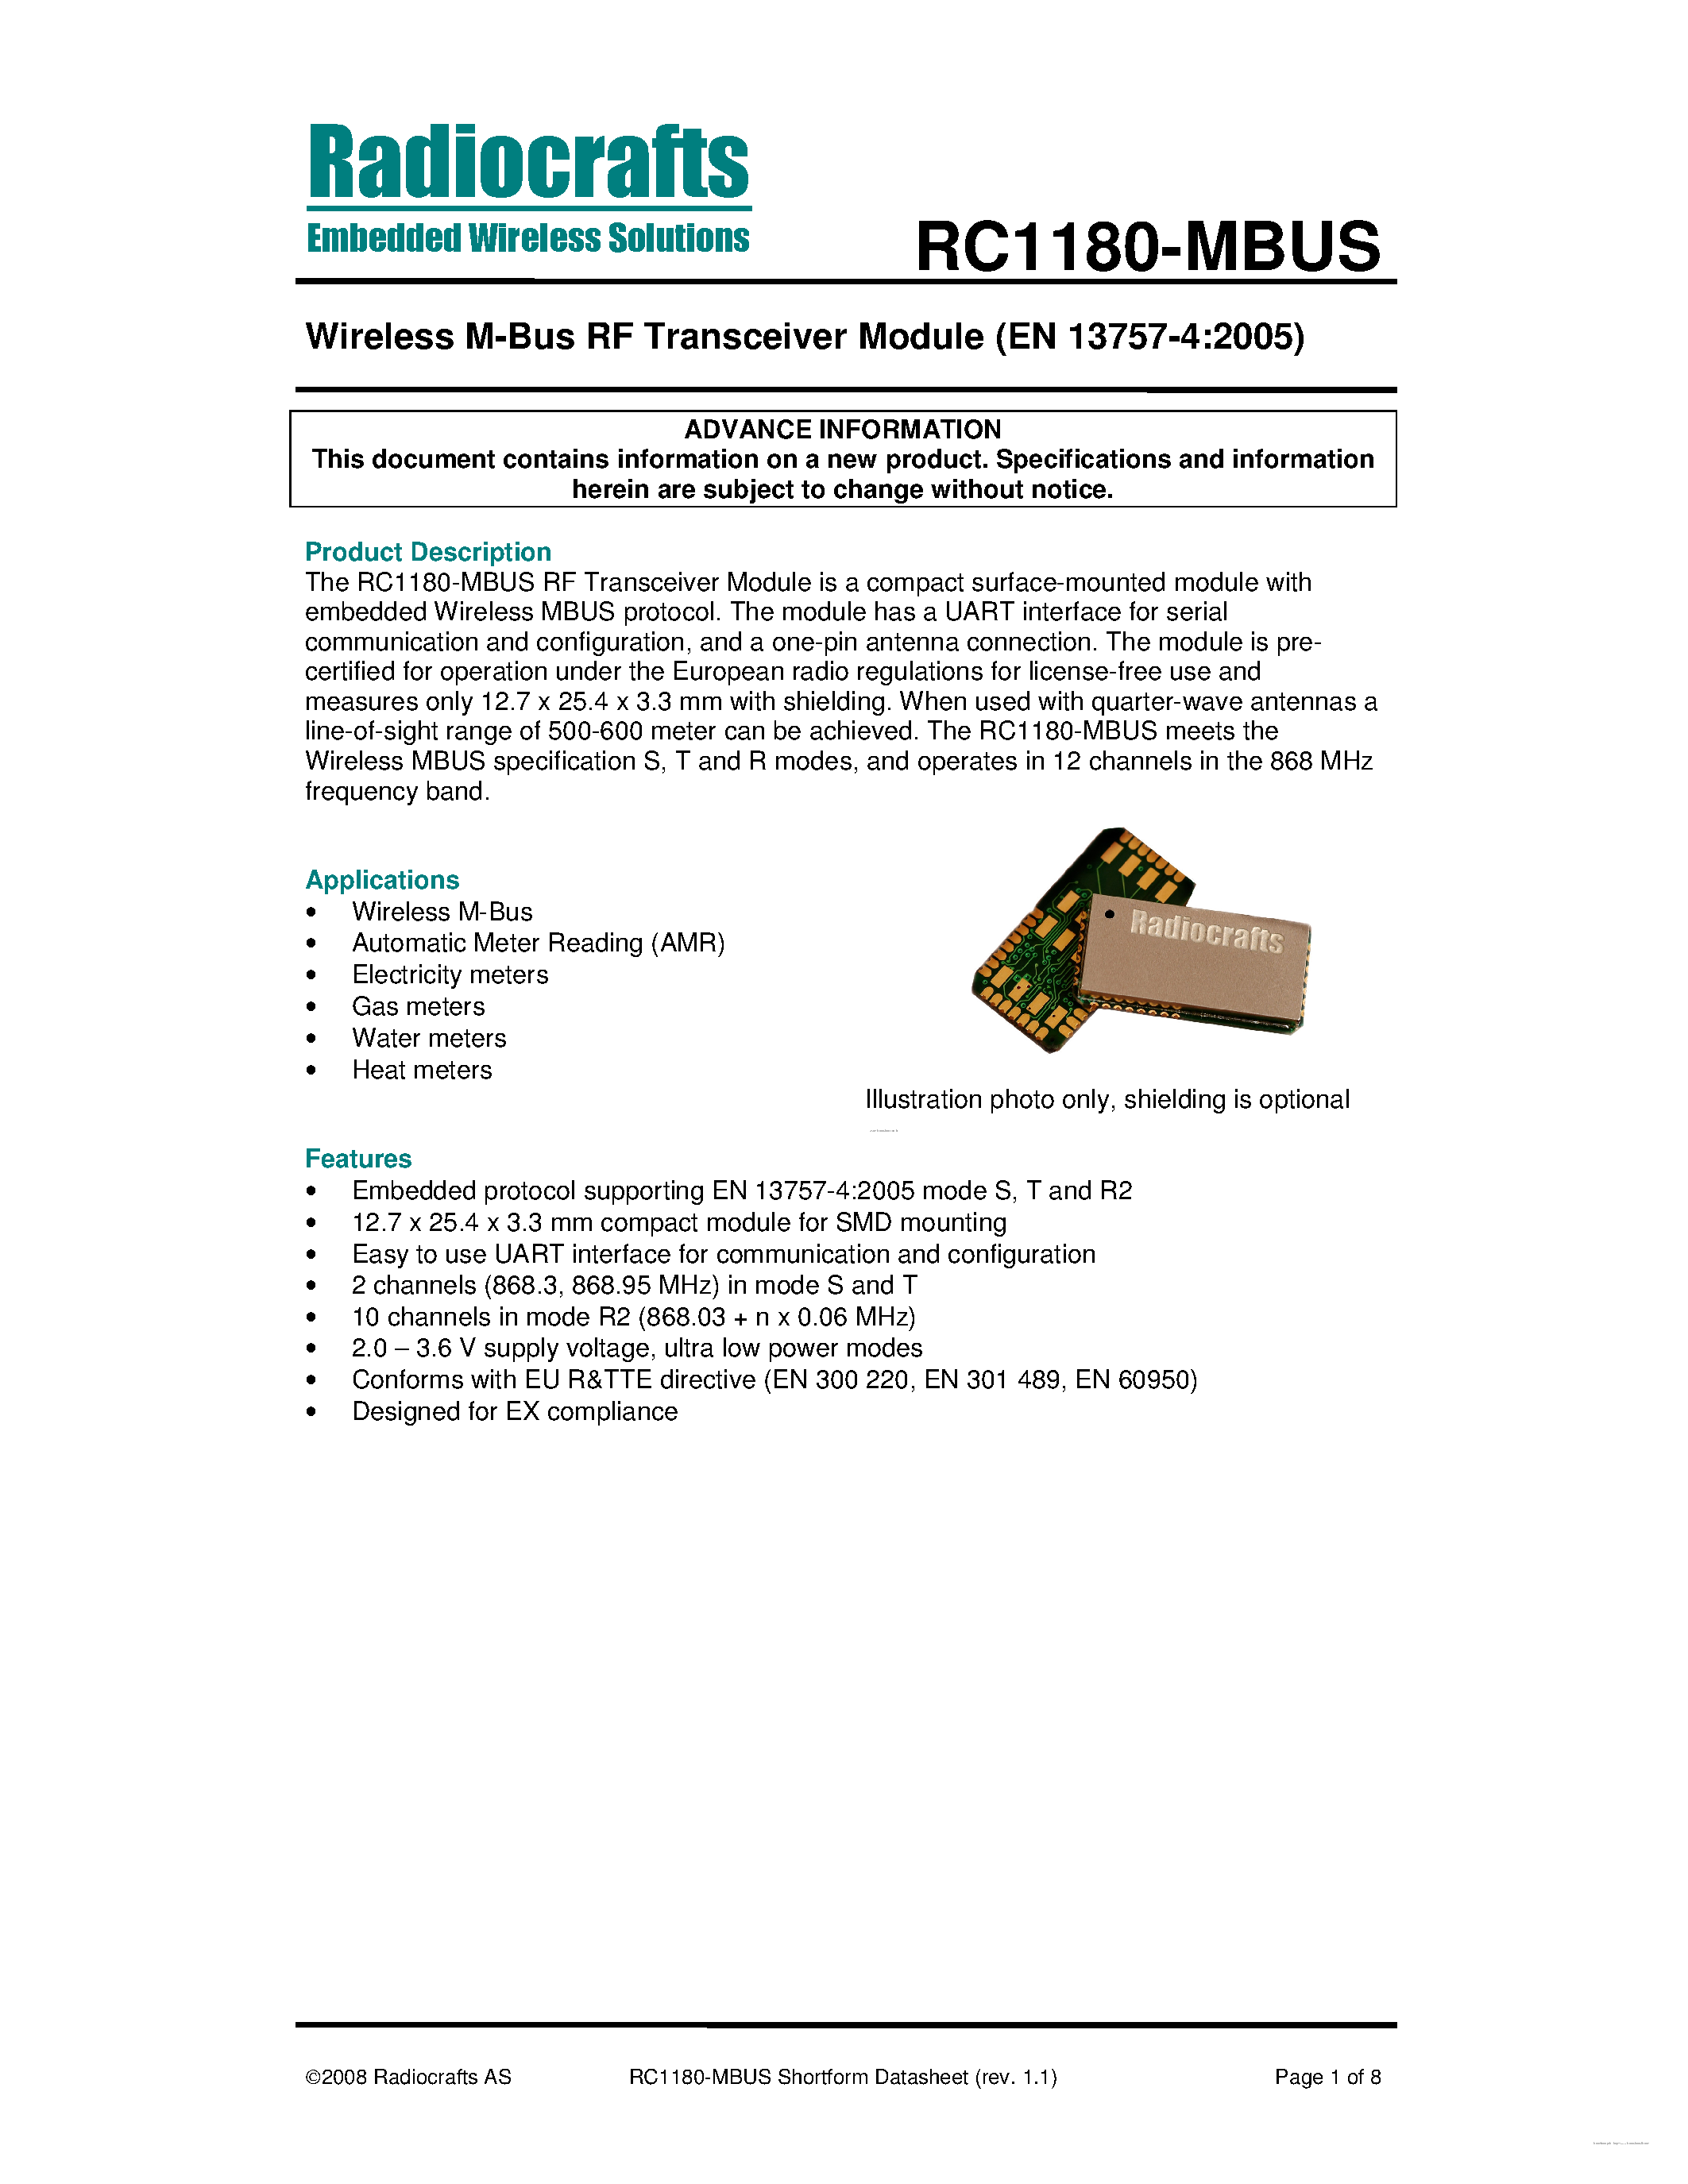 Datasheet RC1180-MBUS - Wireless M-Bus RF Transceiver Module page 1